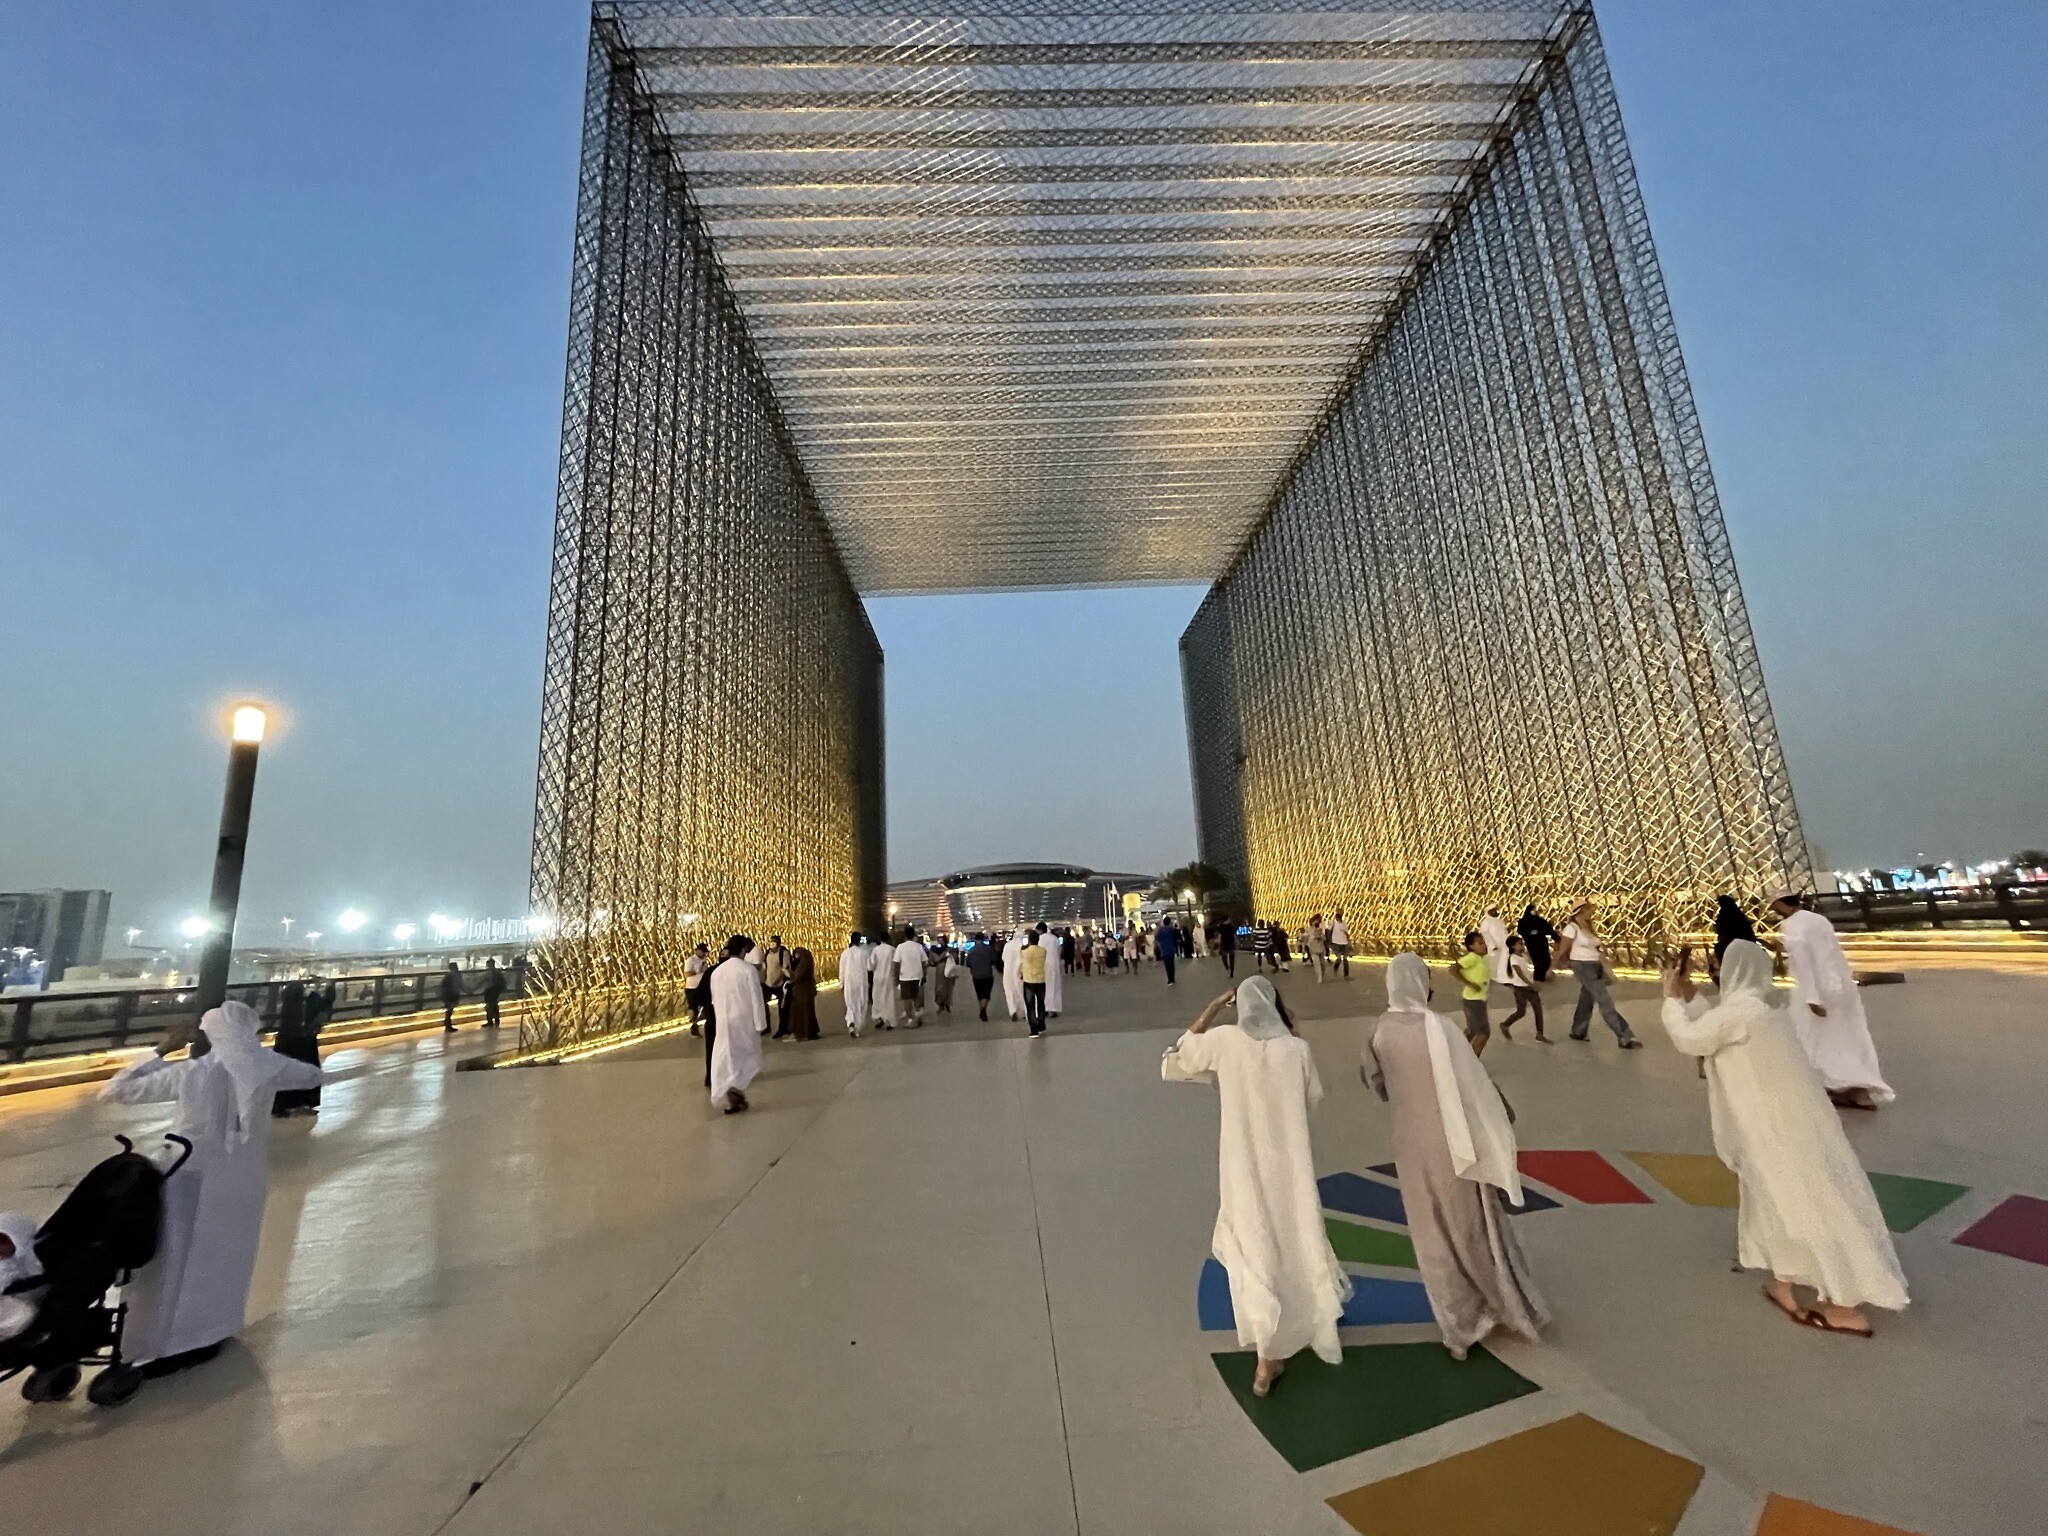 The dramatic entrance to the Dubai Expo